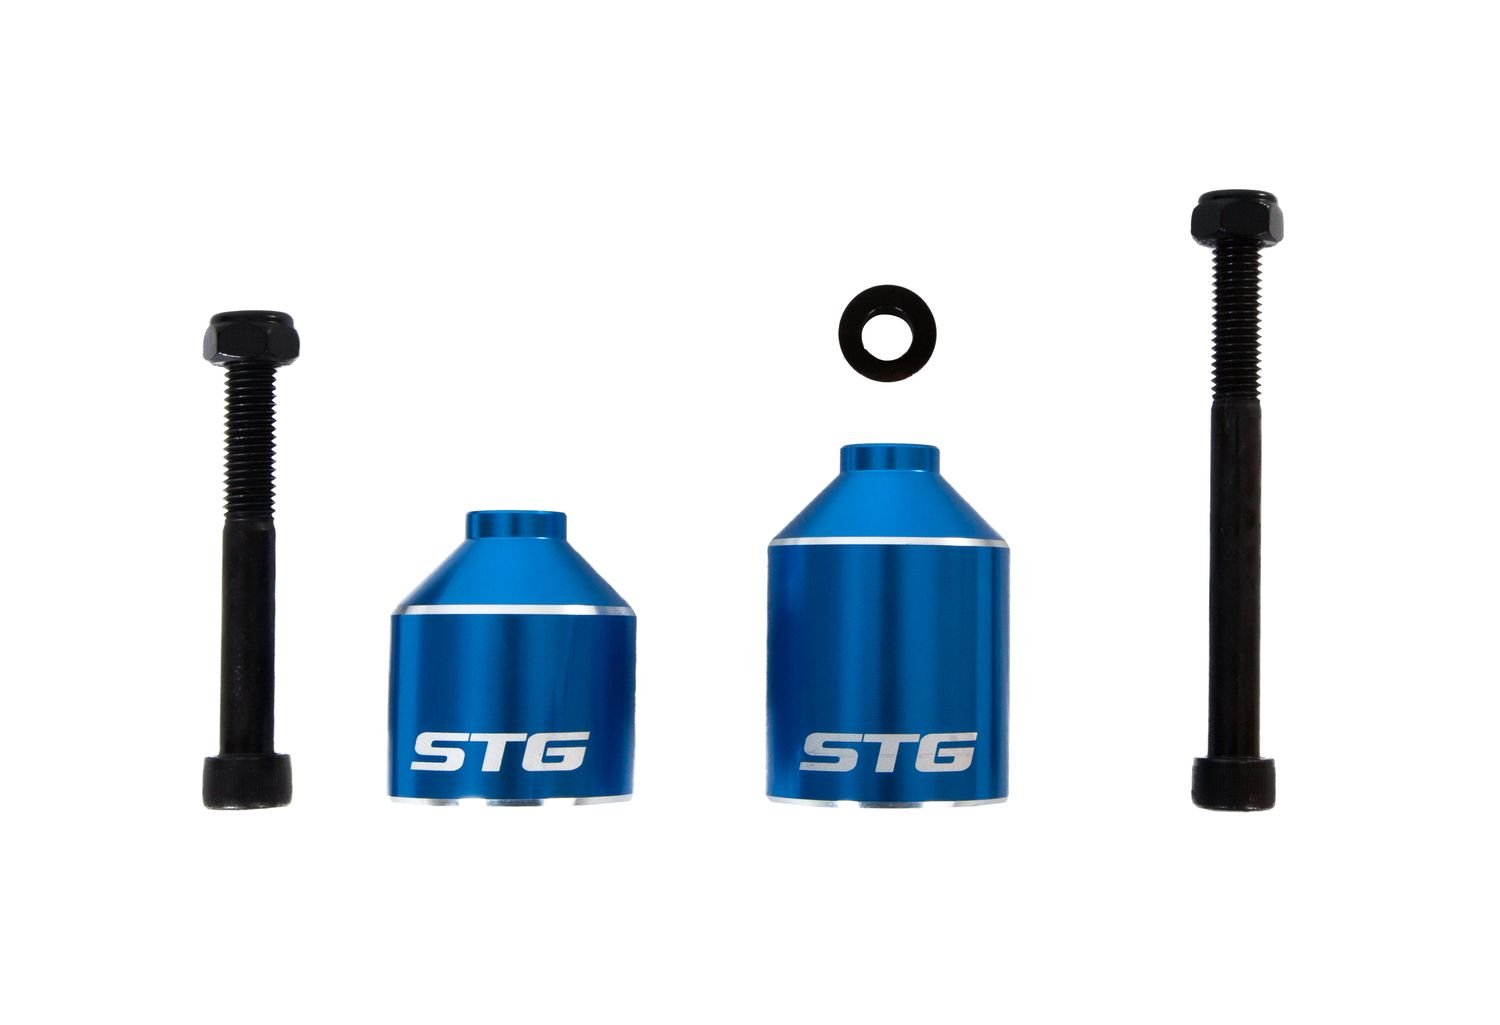 Пеги STG для трюкового самоката с осью, 36 мм, алюминий, синий, Х99074 купить на ЖДБЗ.ру - фотография № 3